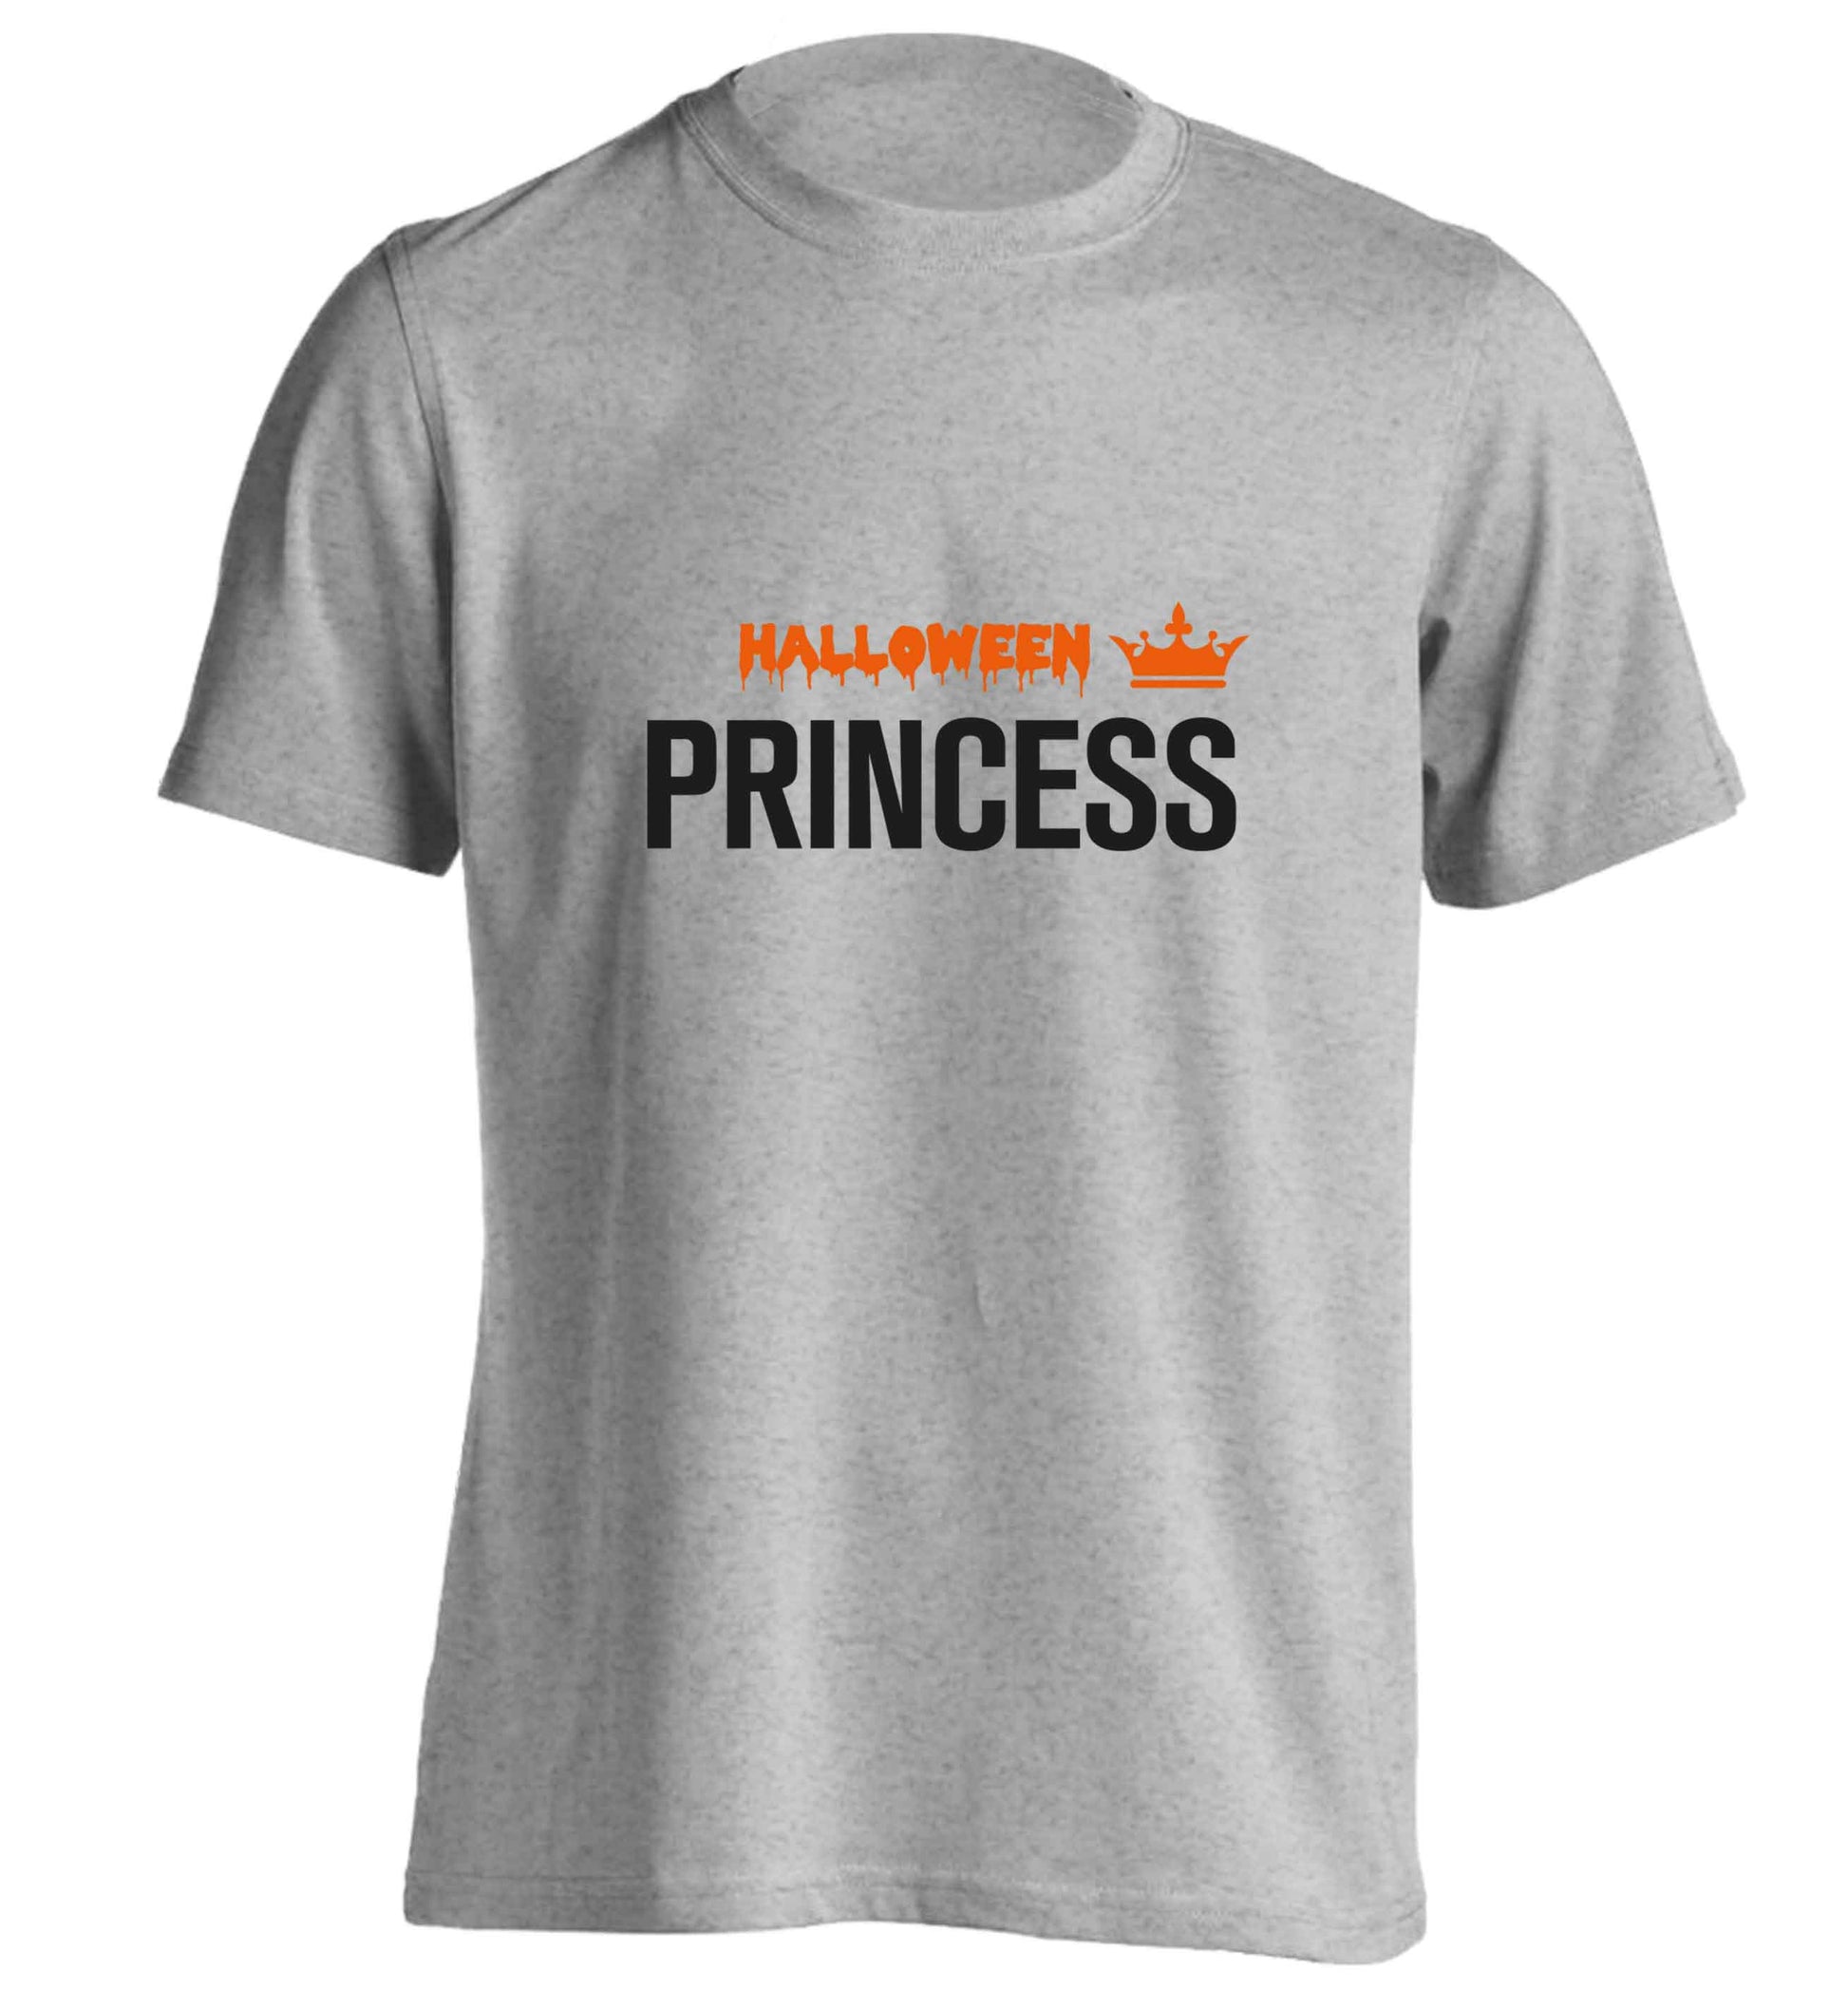 Halloween princess adults unisex grey Tshirt 2XL